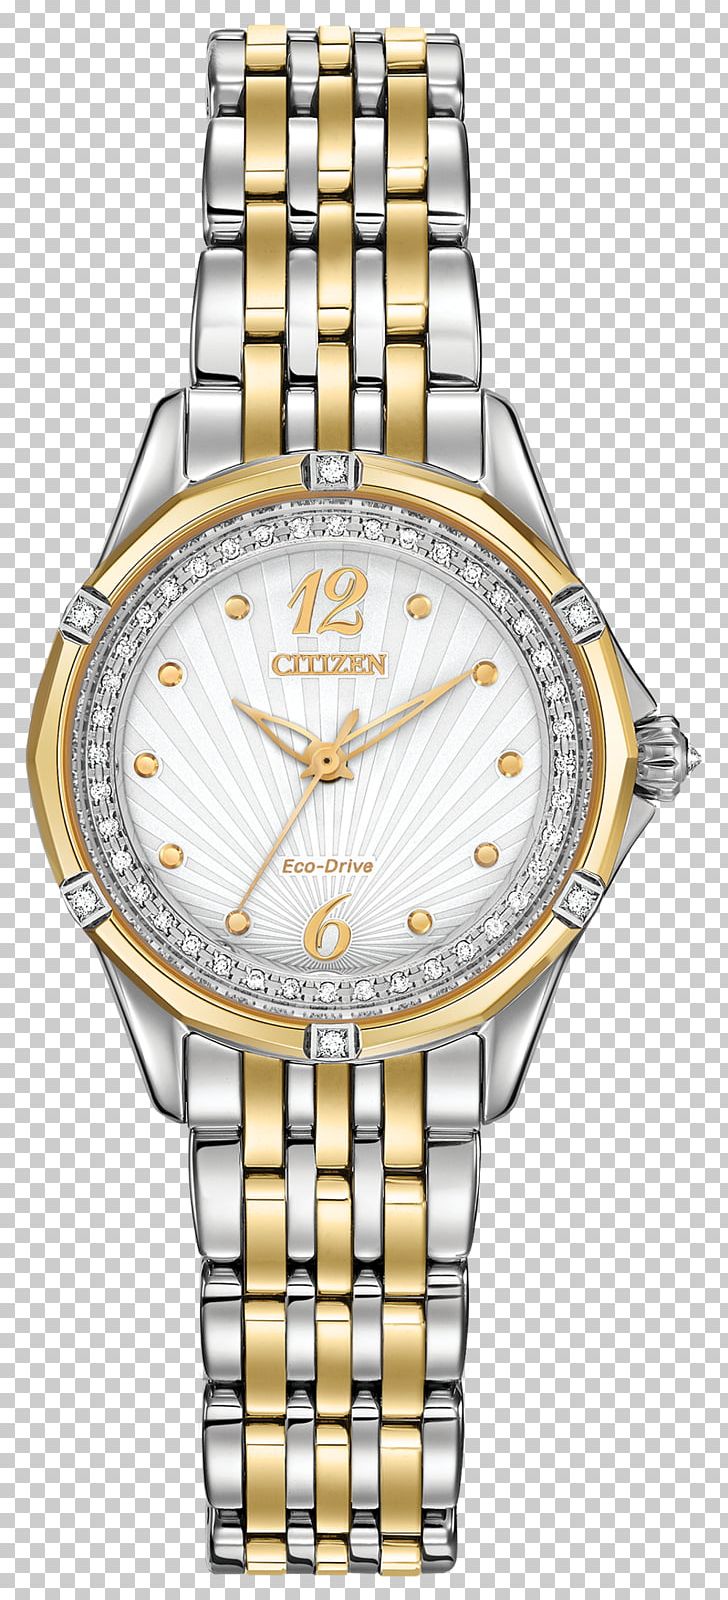 Eco-Drive Citizen Holdings Watch Bracelet Clock PNG, Clipart, Accessories, Bracelet, Brand, Business, Chronograph Free PNG Download